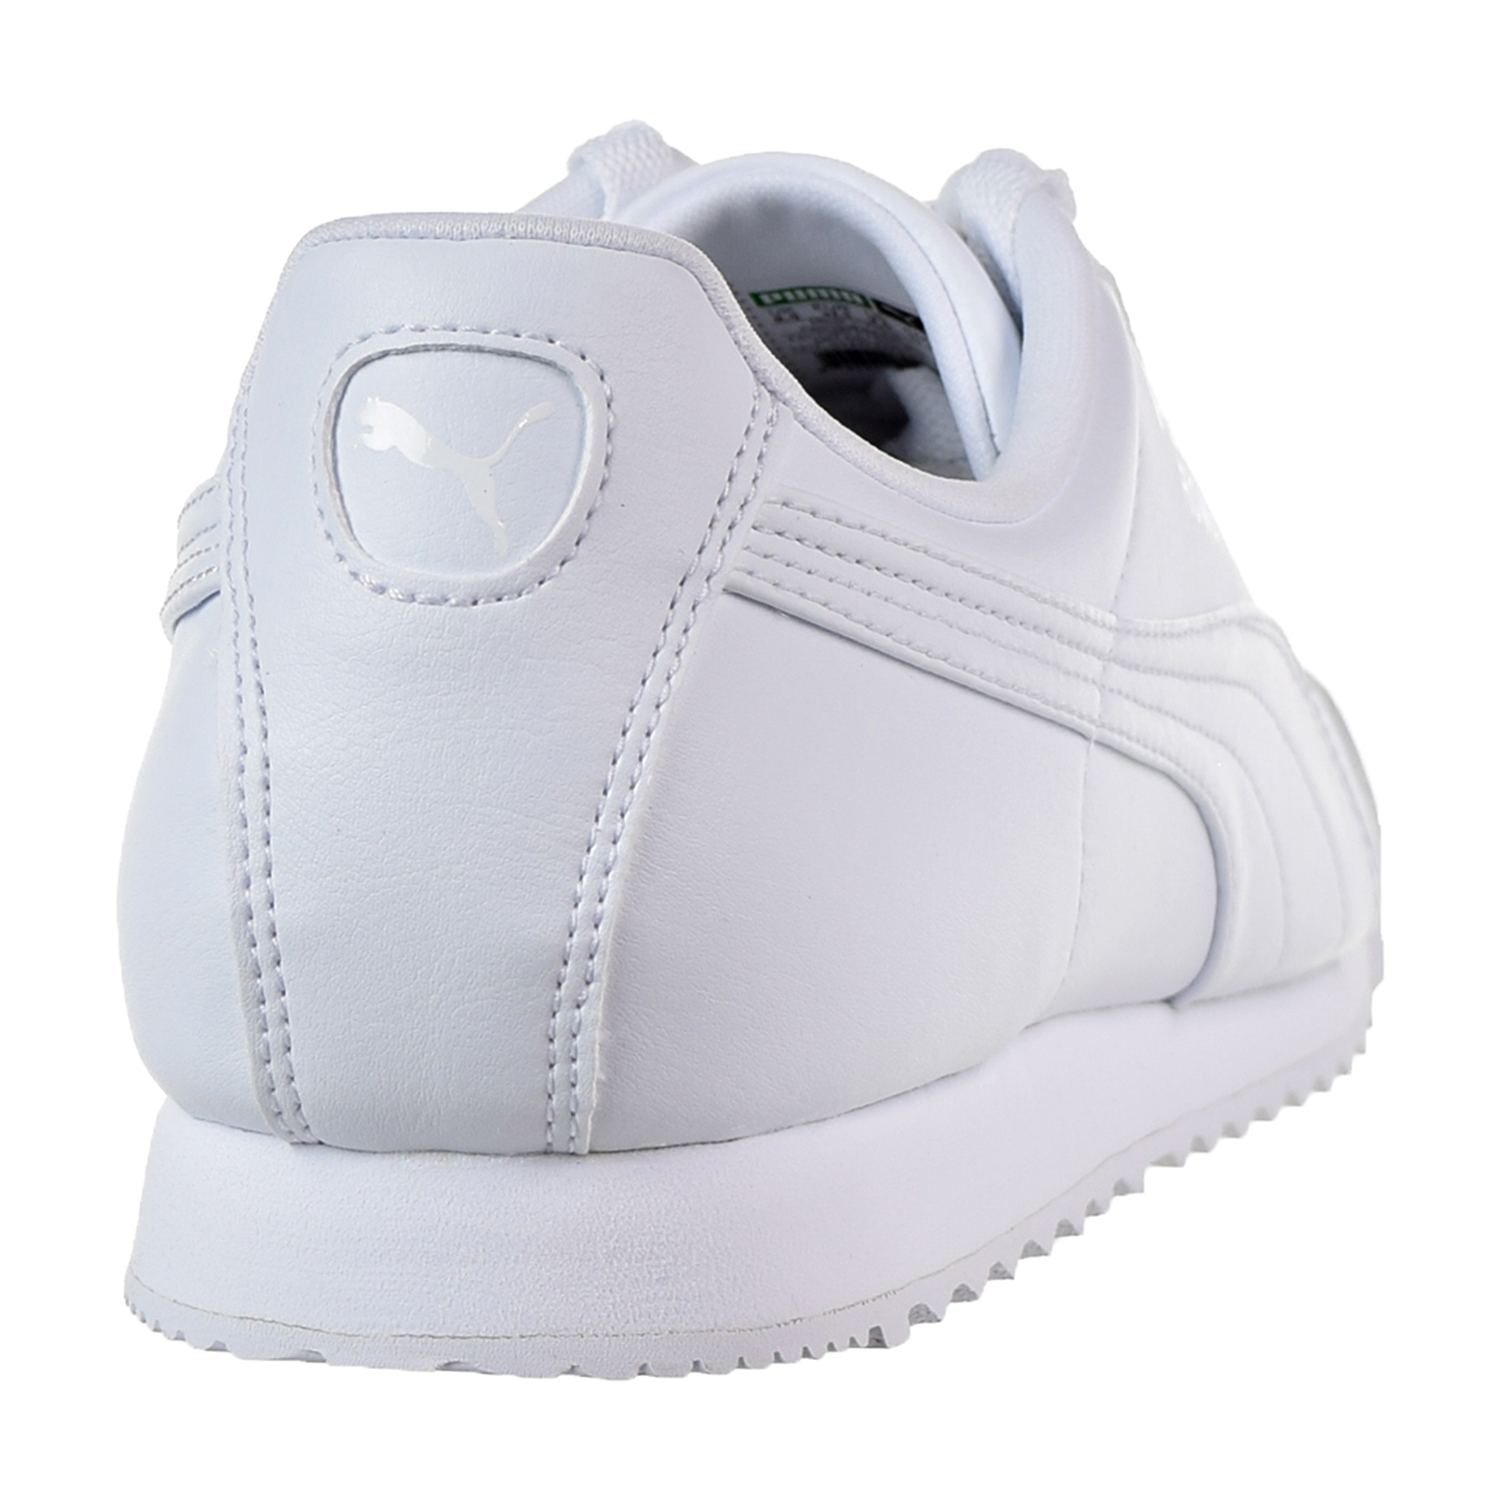 Puma Roma Basic Men's Shoes Puma White-Light Grey 353572-21 | eBay